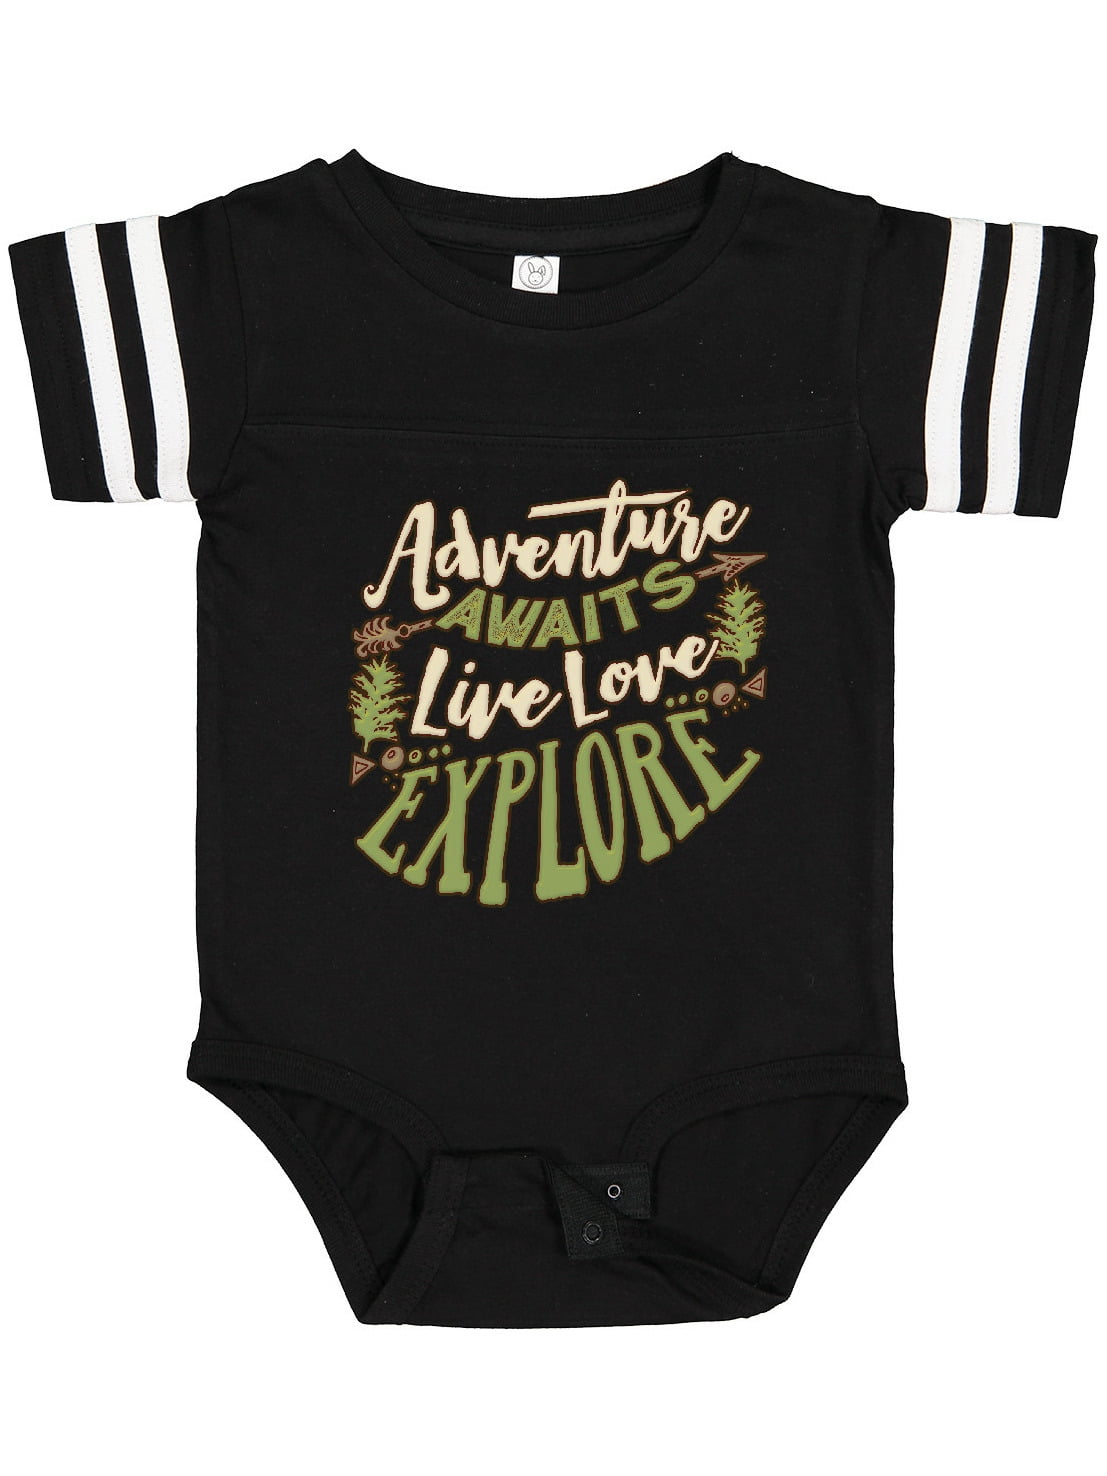 Crawl Walk Camp Adventure Onesie® Baby Shower Gift Hipster Baby Clothes Camping Onesie